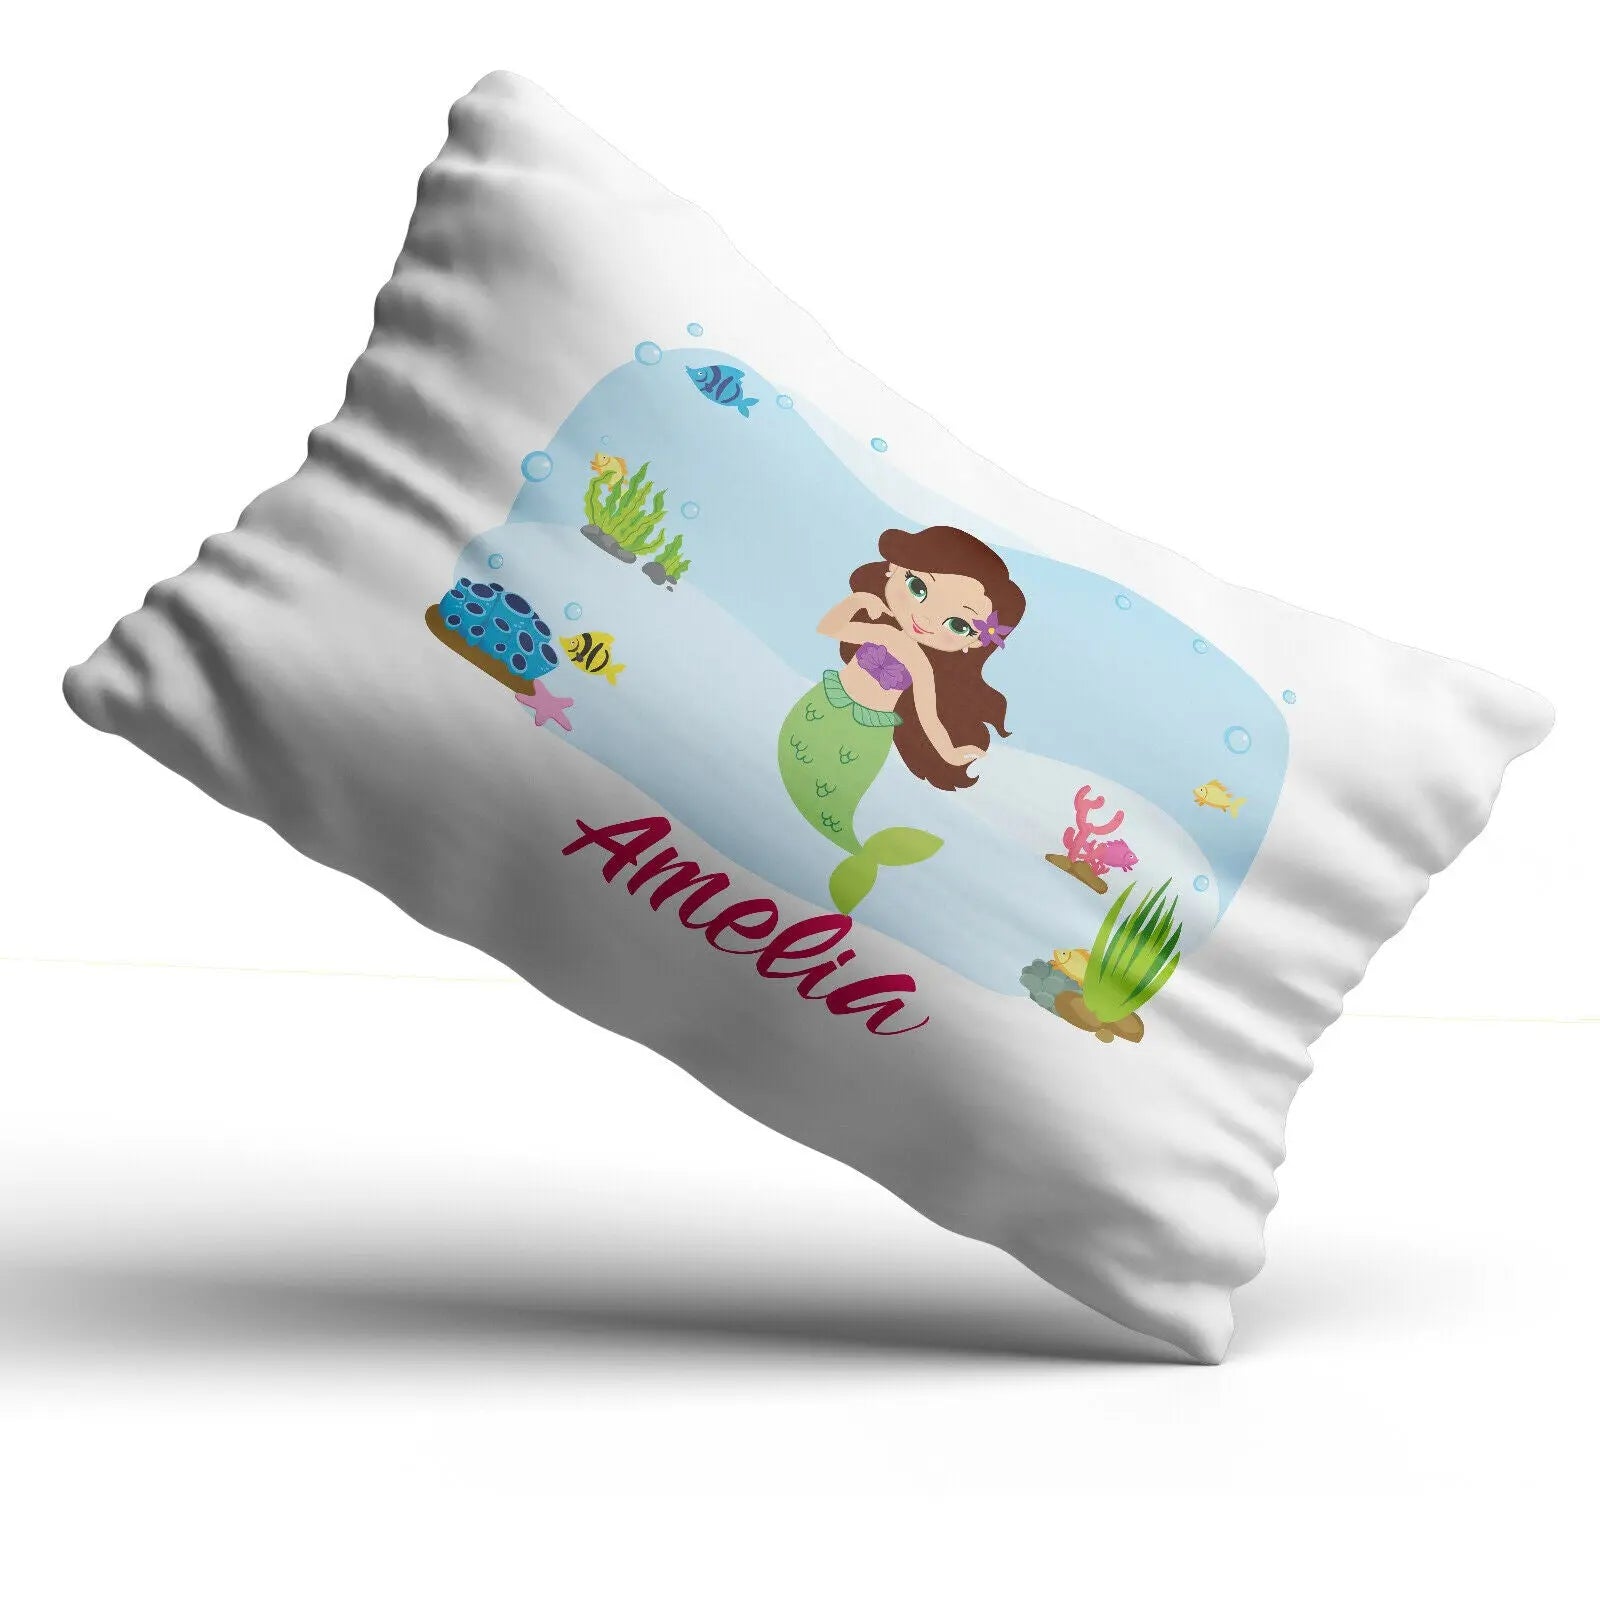 Personalised Mermaid Pillow Case Printed Gift Children Custom Print - Brown Hair